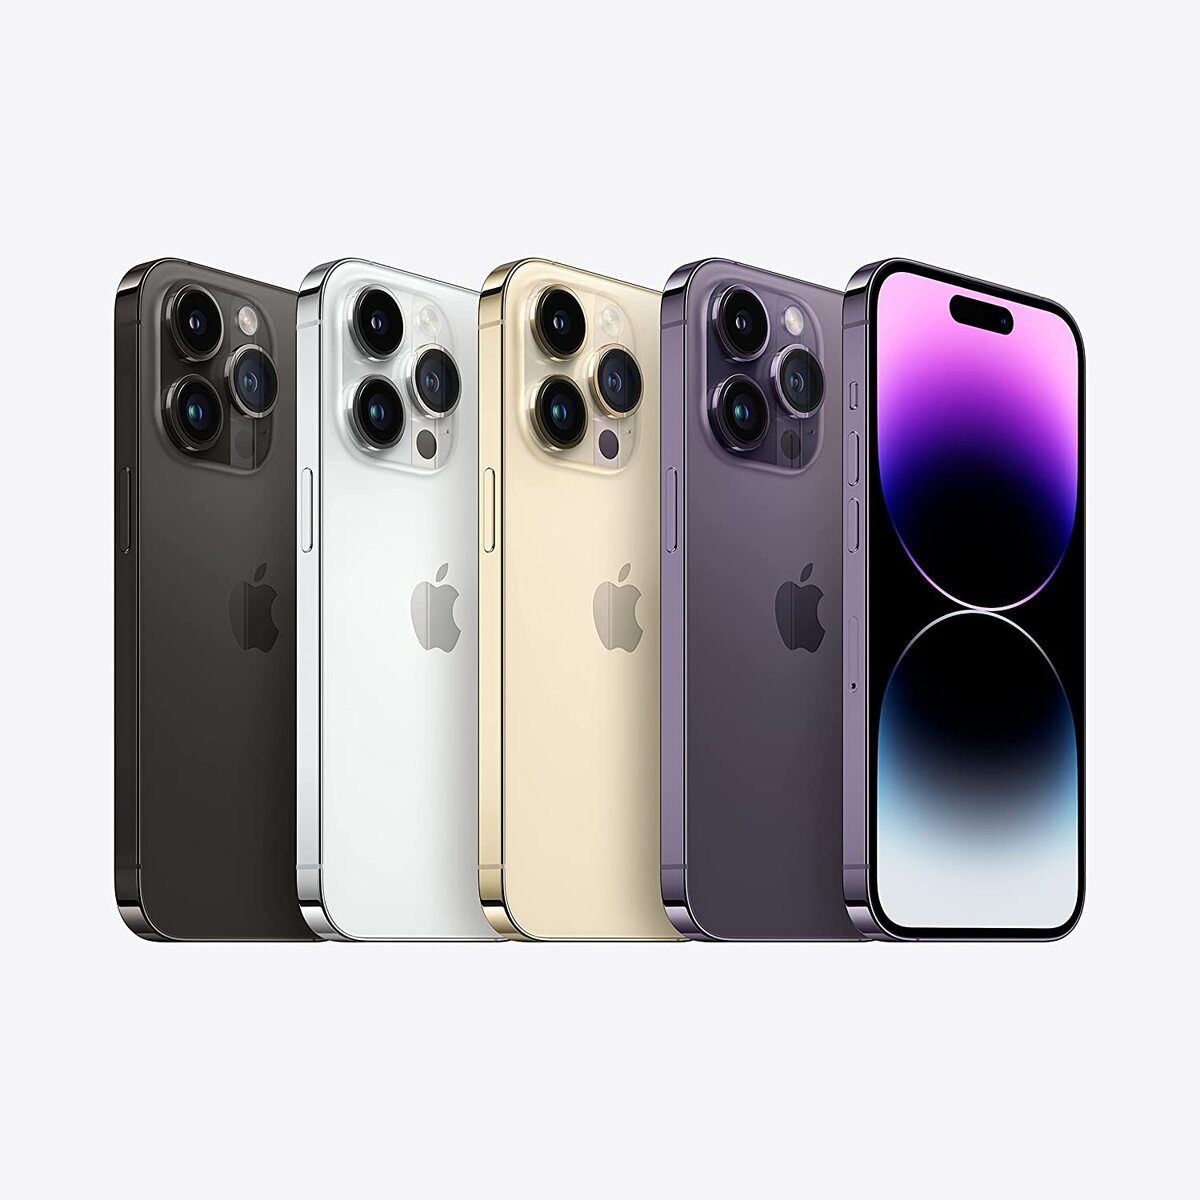 Apple iPhone 14 Pro, 128 GB, Deep Purple, International Specs, Japanese Version